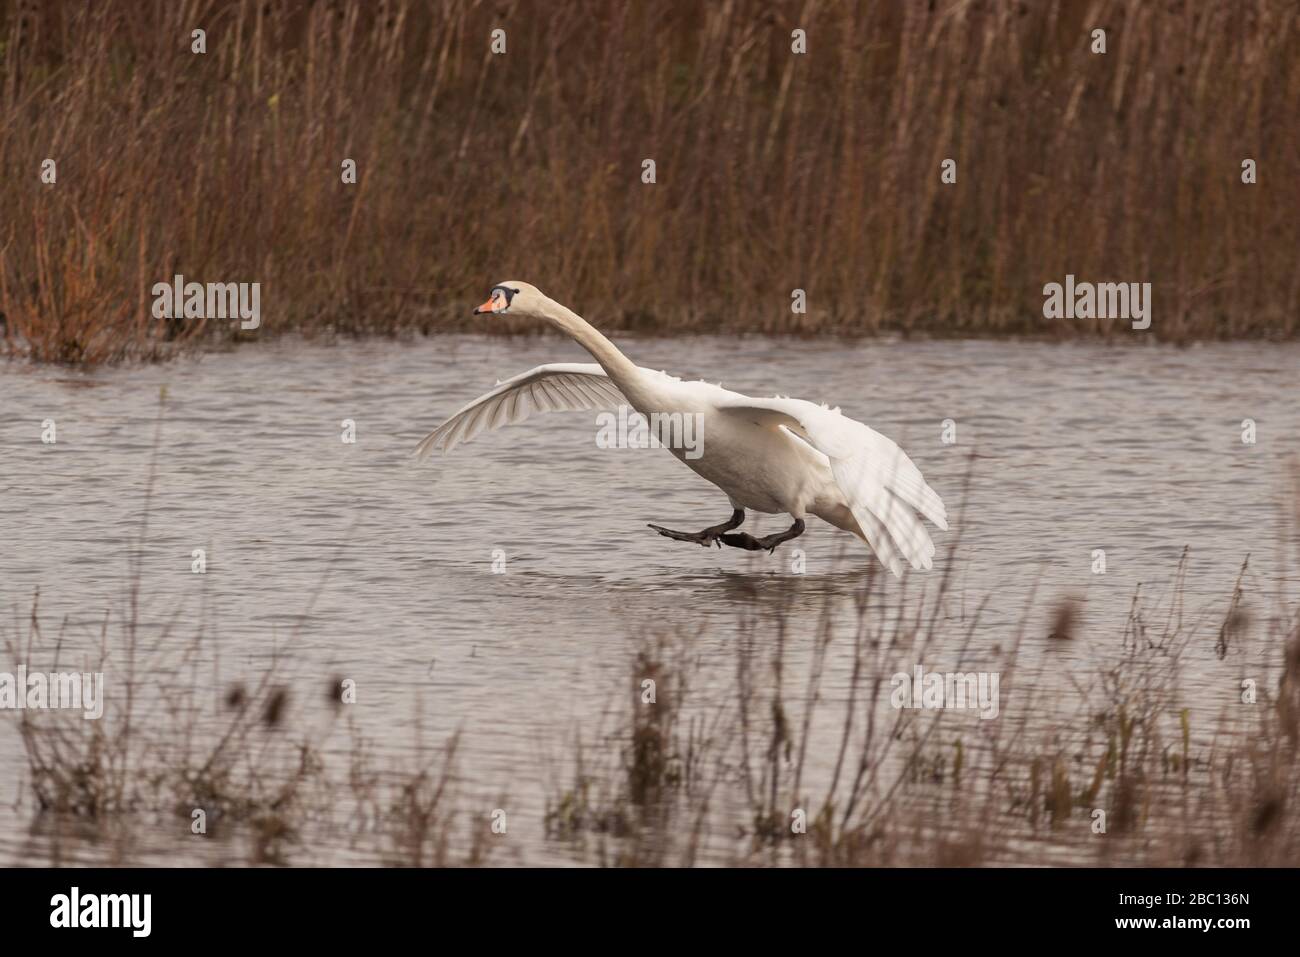 UK Wildlife- Swans in natural surroundings - Floodplain forest nature reserve - Milton Keynes Stock Photo